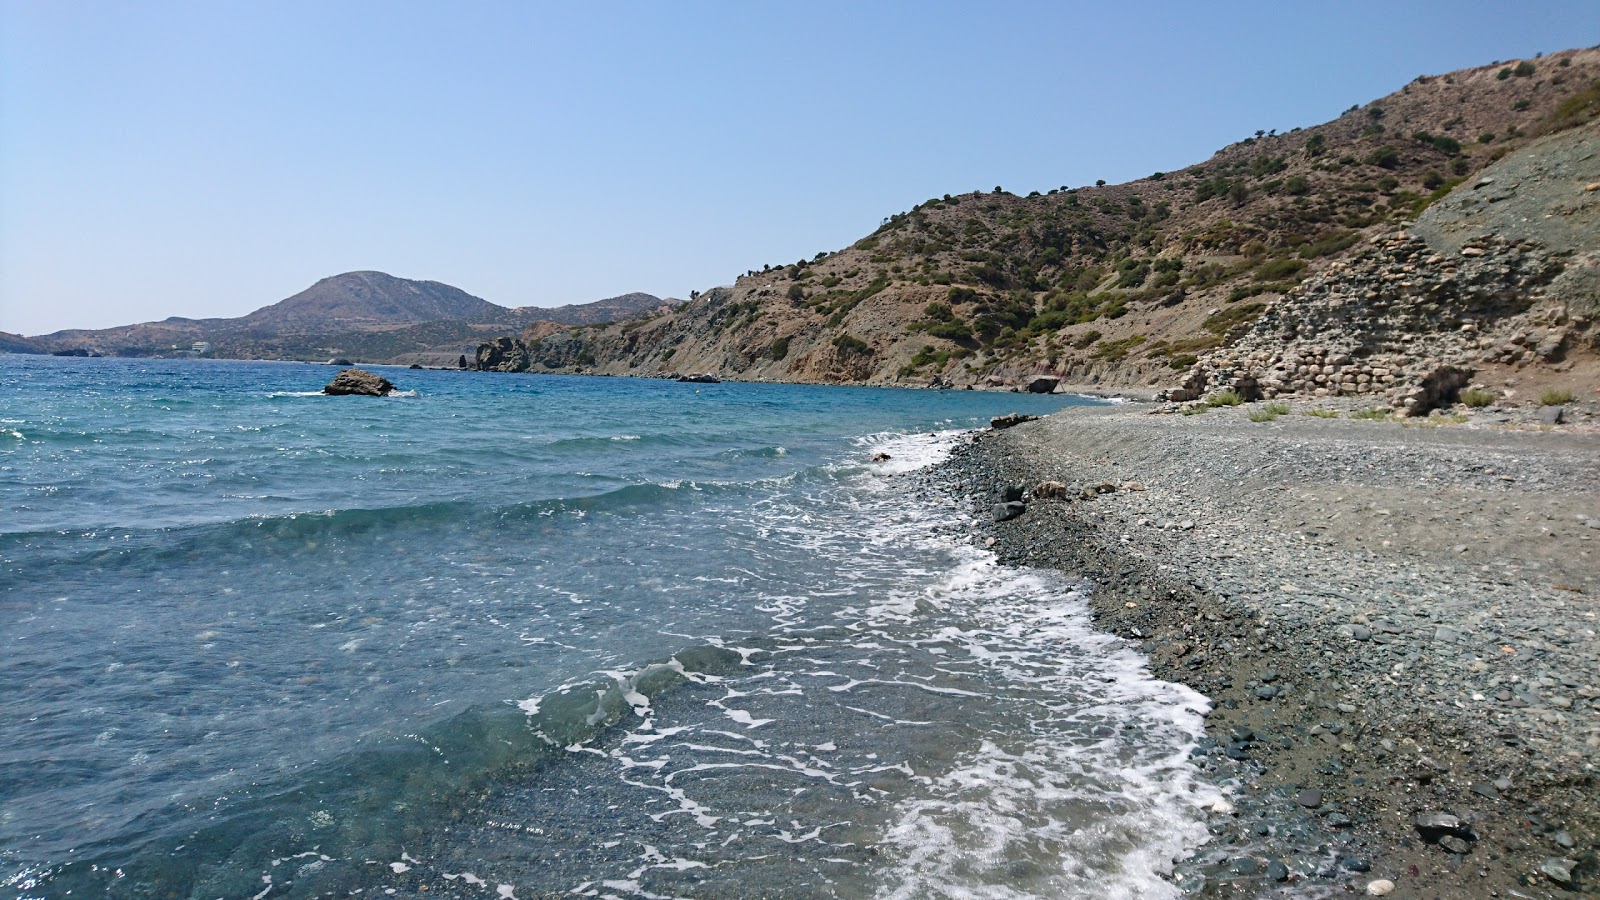 Foto af Chrysostomos beach og bosættelsen